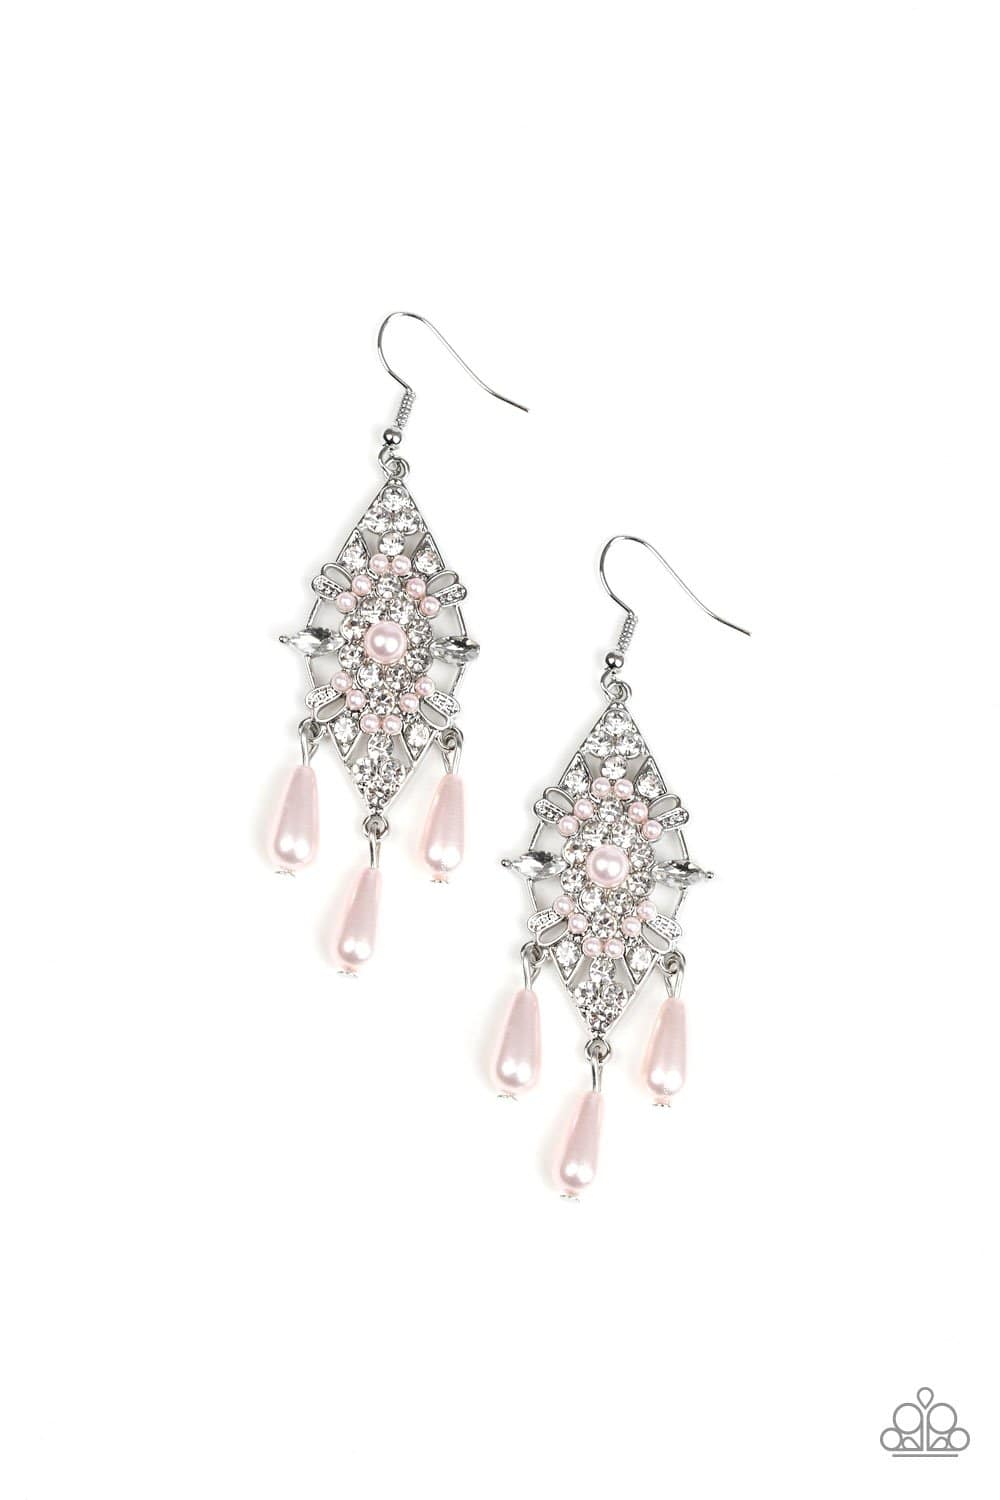 Majestic Mood - Pink Pearl Earrings - Paparazzi Accessories - GlaMarous Titi Jewels